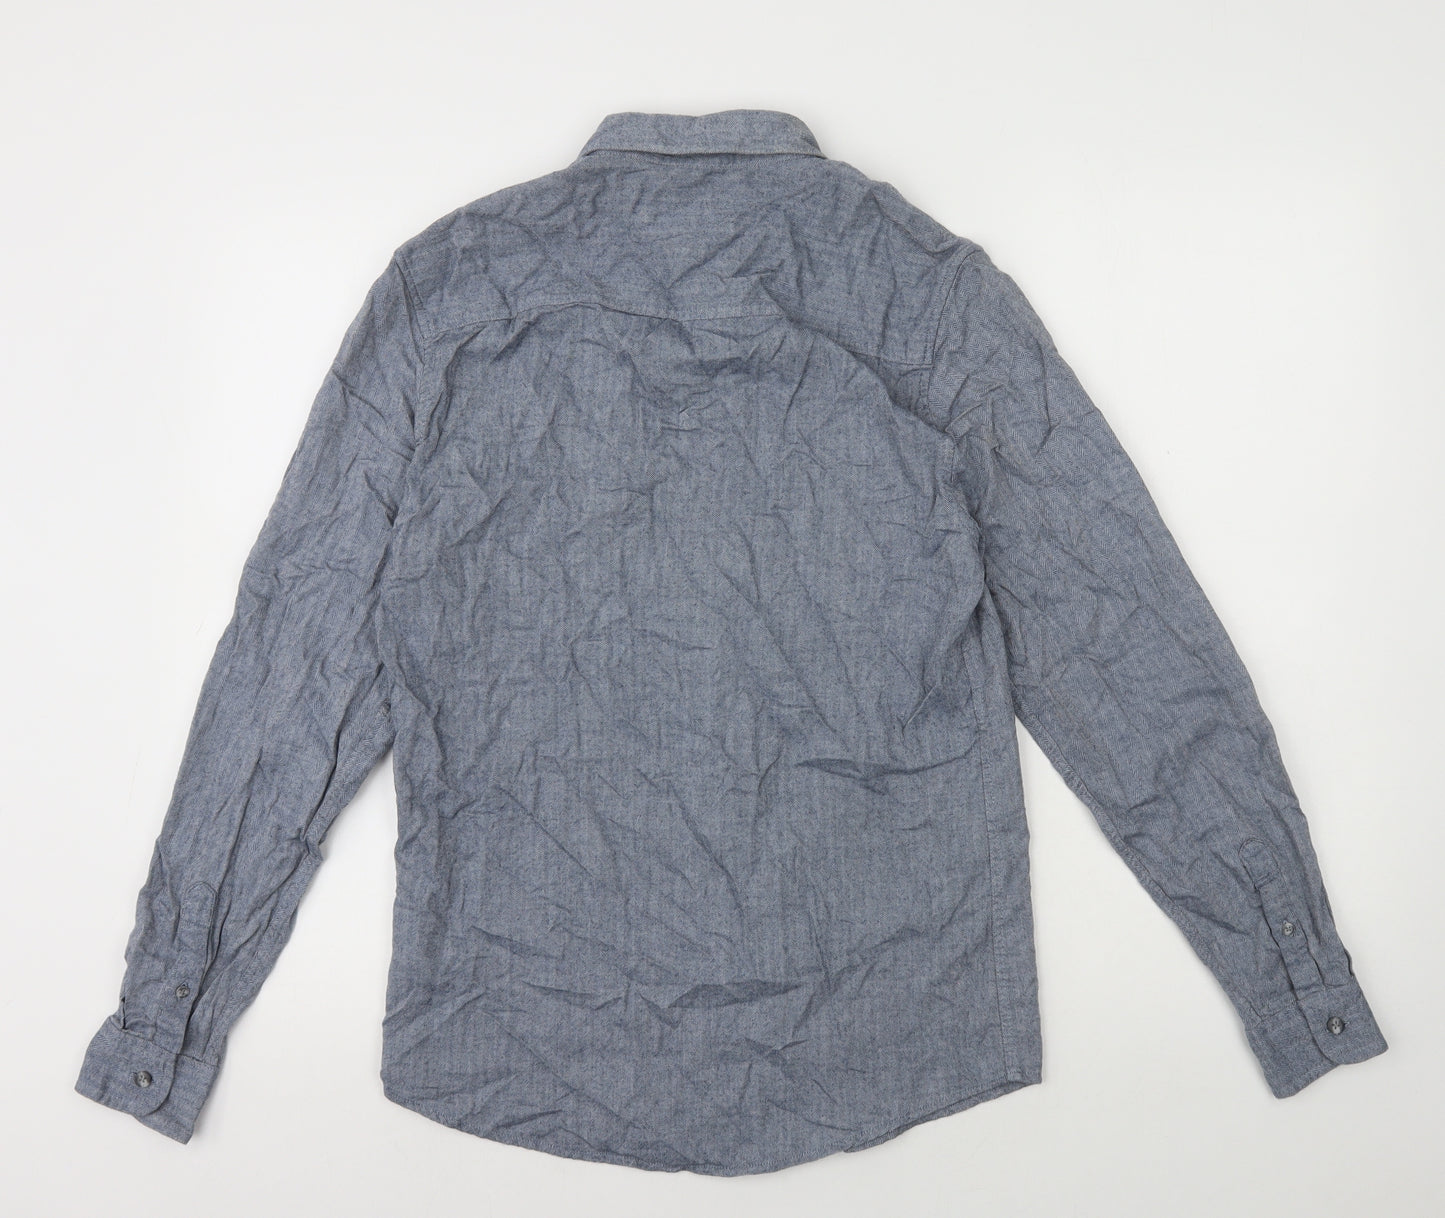 Topman Mens Blue Herringbone Cotton Button-Up Size S Collared Button